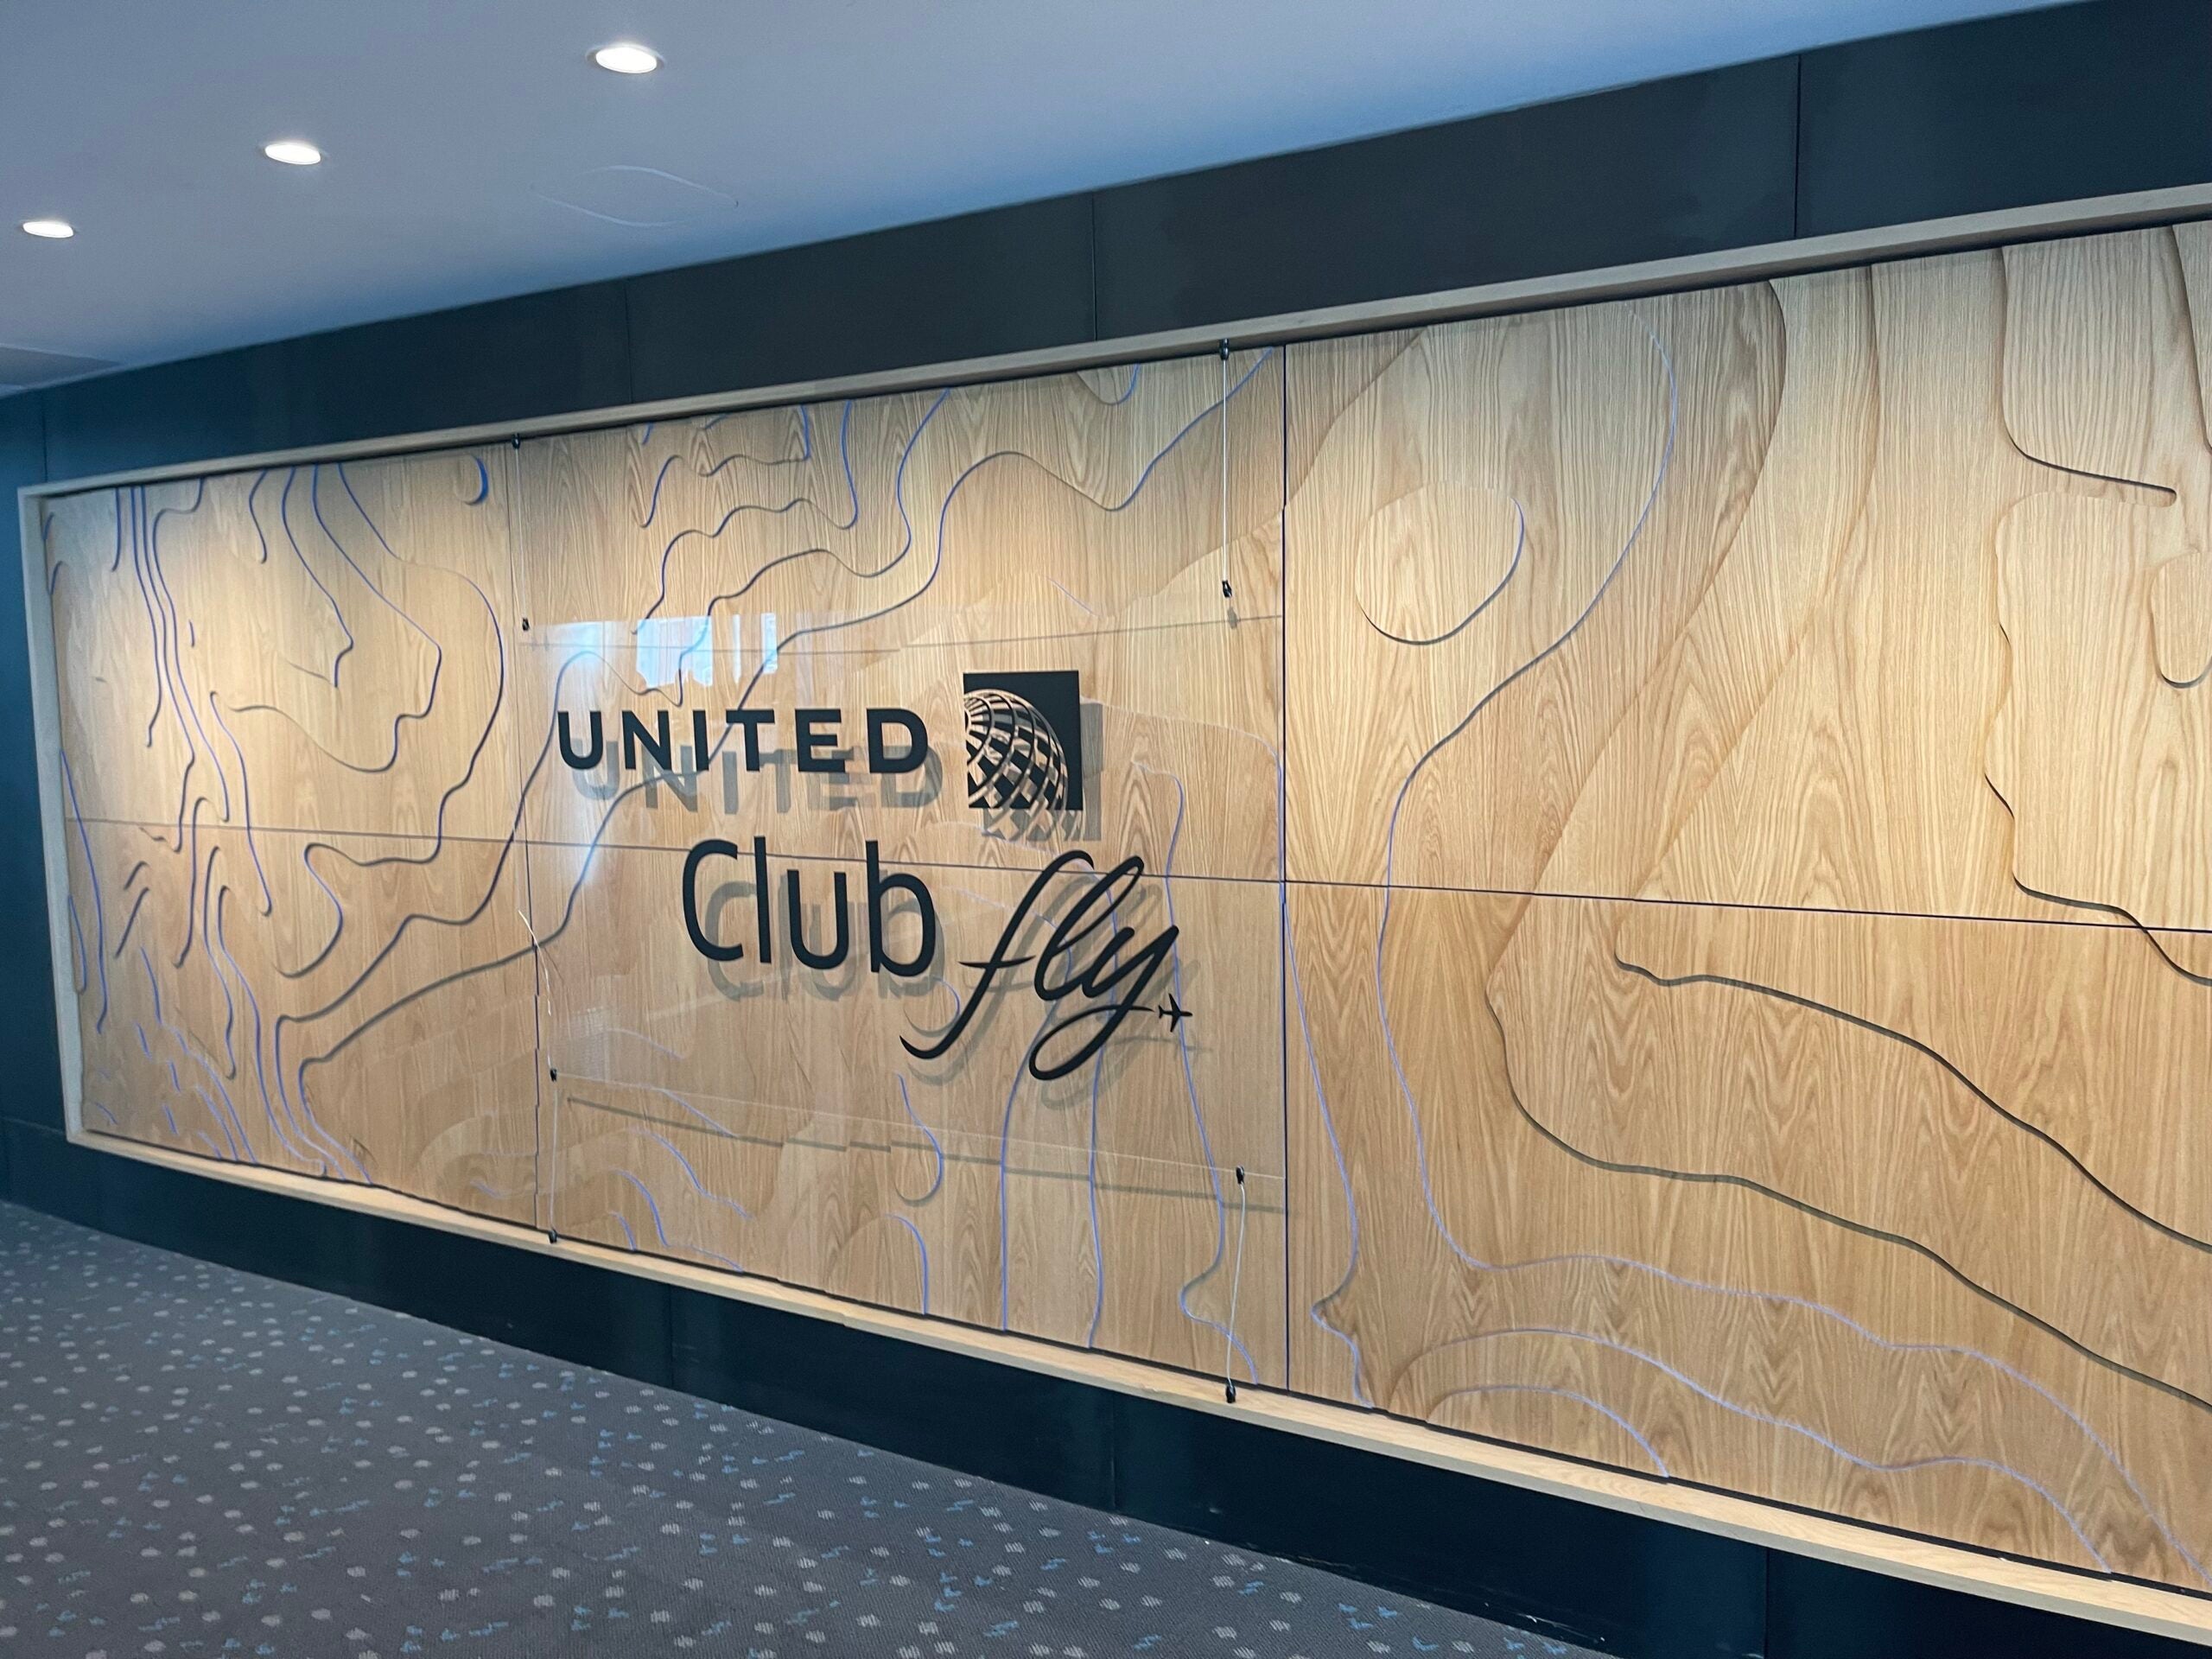 first united bank travel club